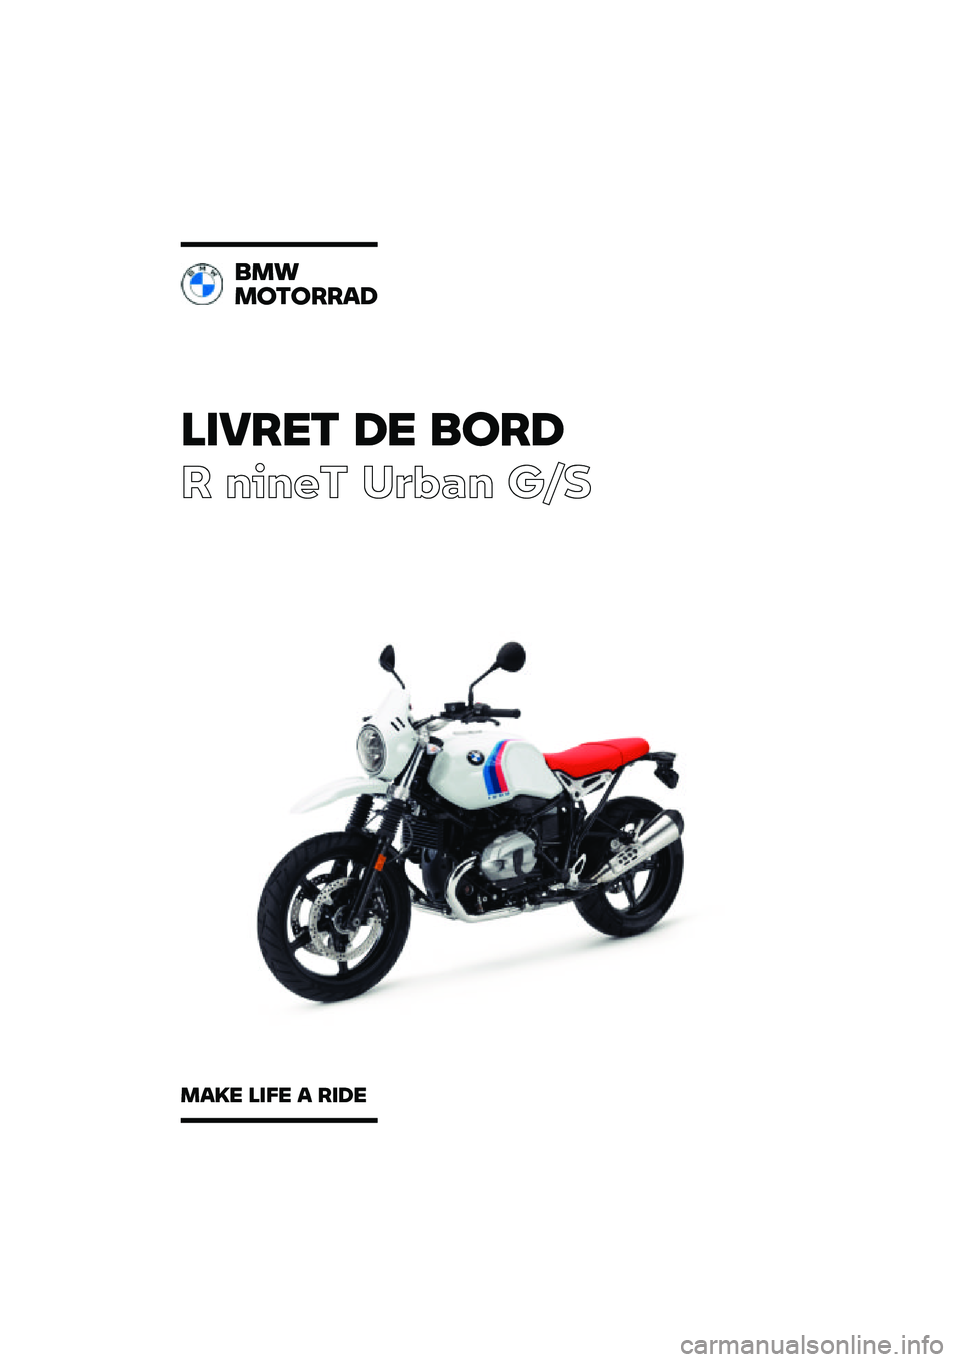 BMW MOTORRAD R NINE T URVAN G/S 2021  Livret de bord (in French) ������ �\b� �	�
��\b
� ����� ��\b�	�
� ��\f�
�	��\f
��
��
���
�\b
��
�� ���� �
 ���\b� 